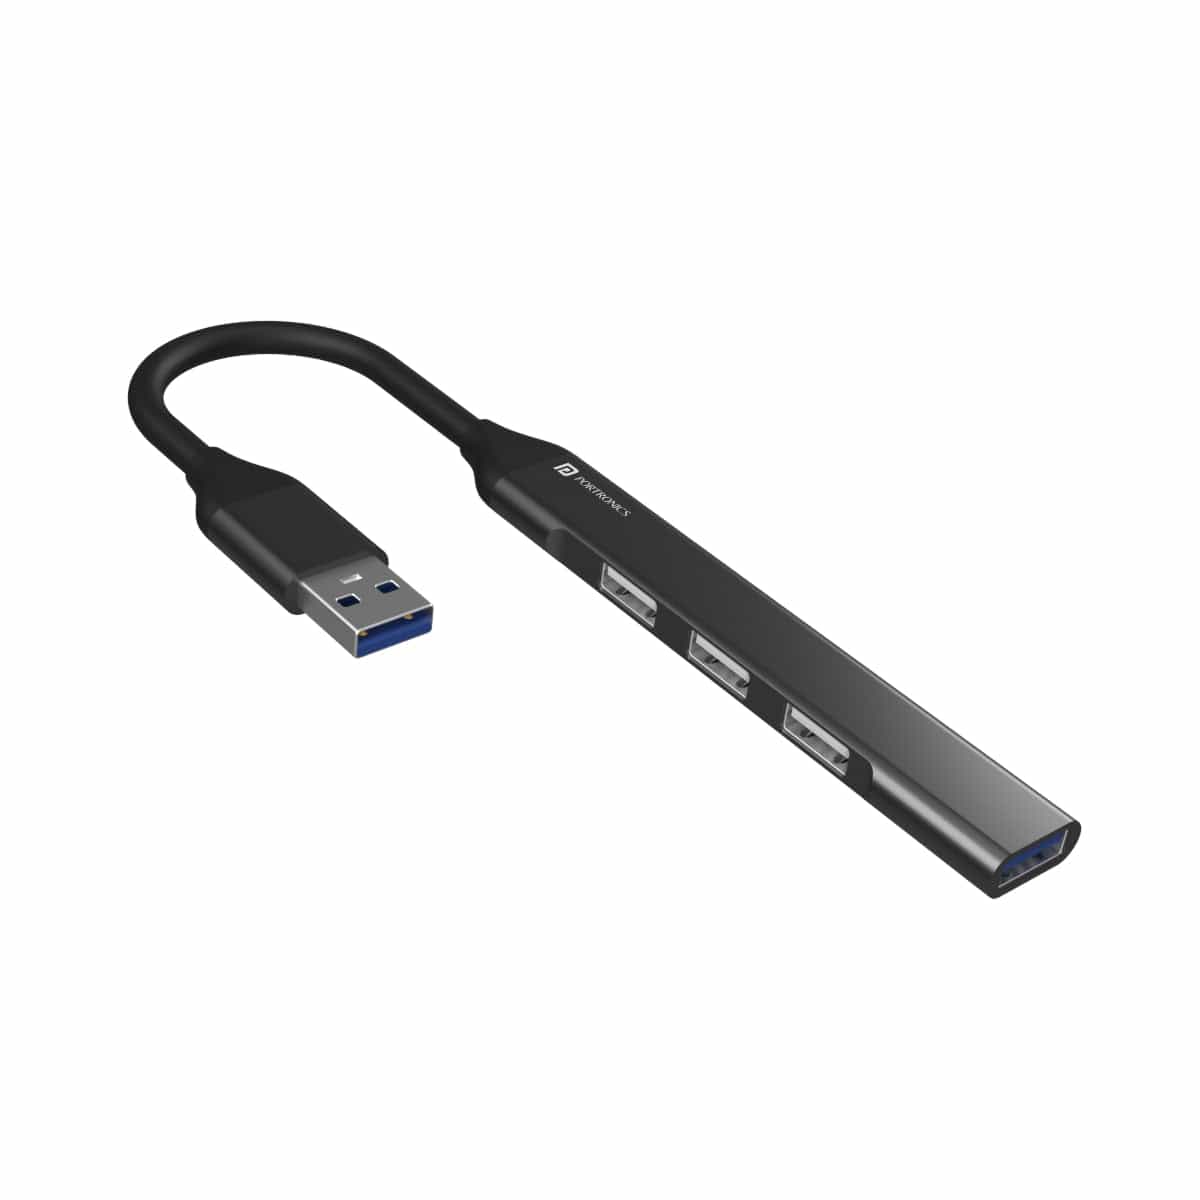 Buy Portronics Mport 31 - 4 in-1 multiport USB hub Fast data Transfer